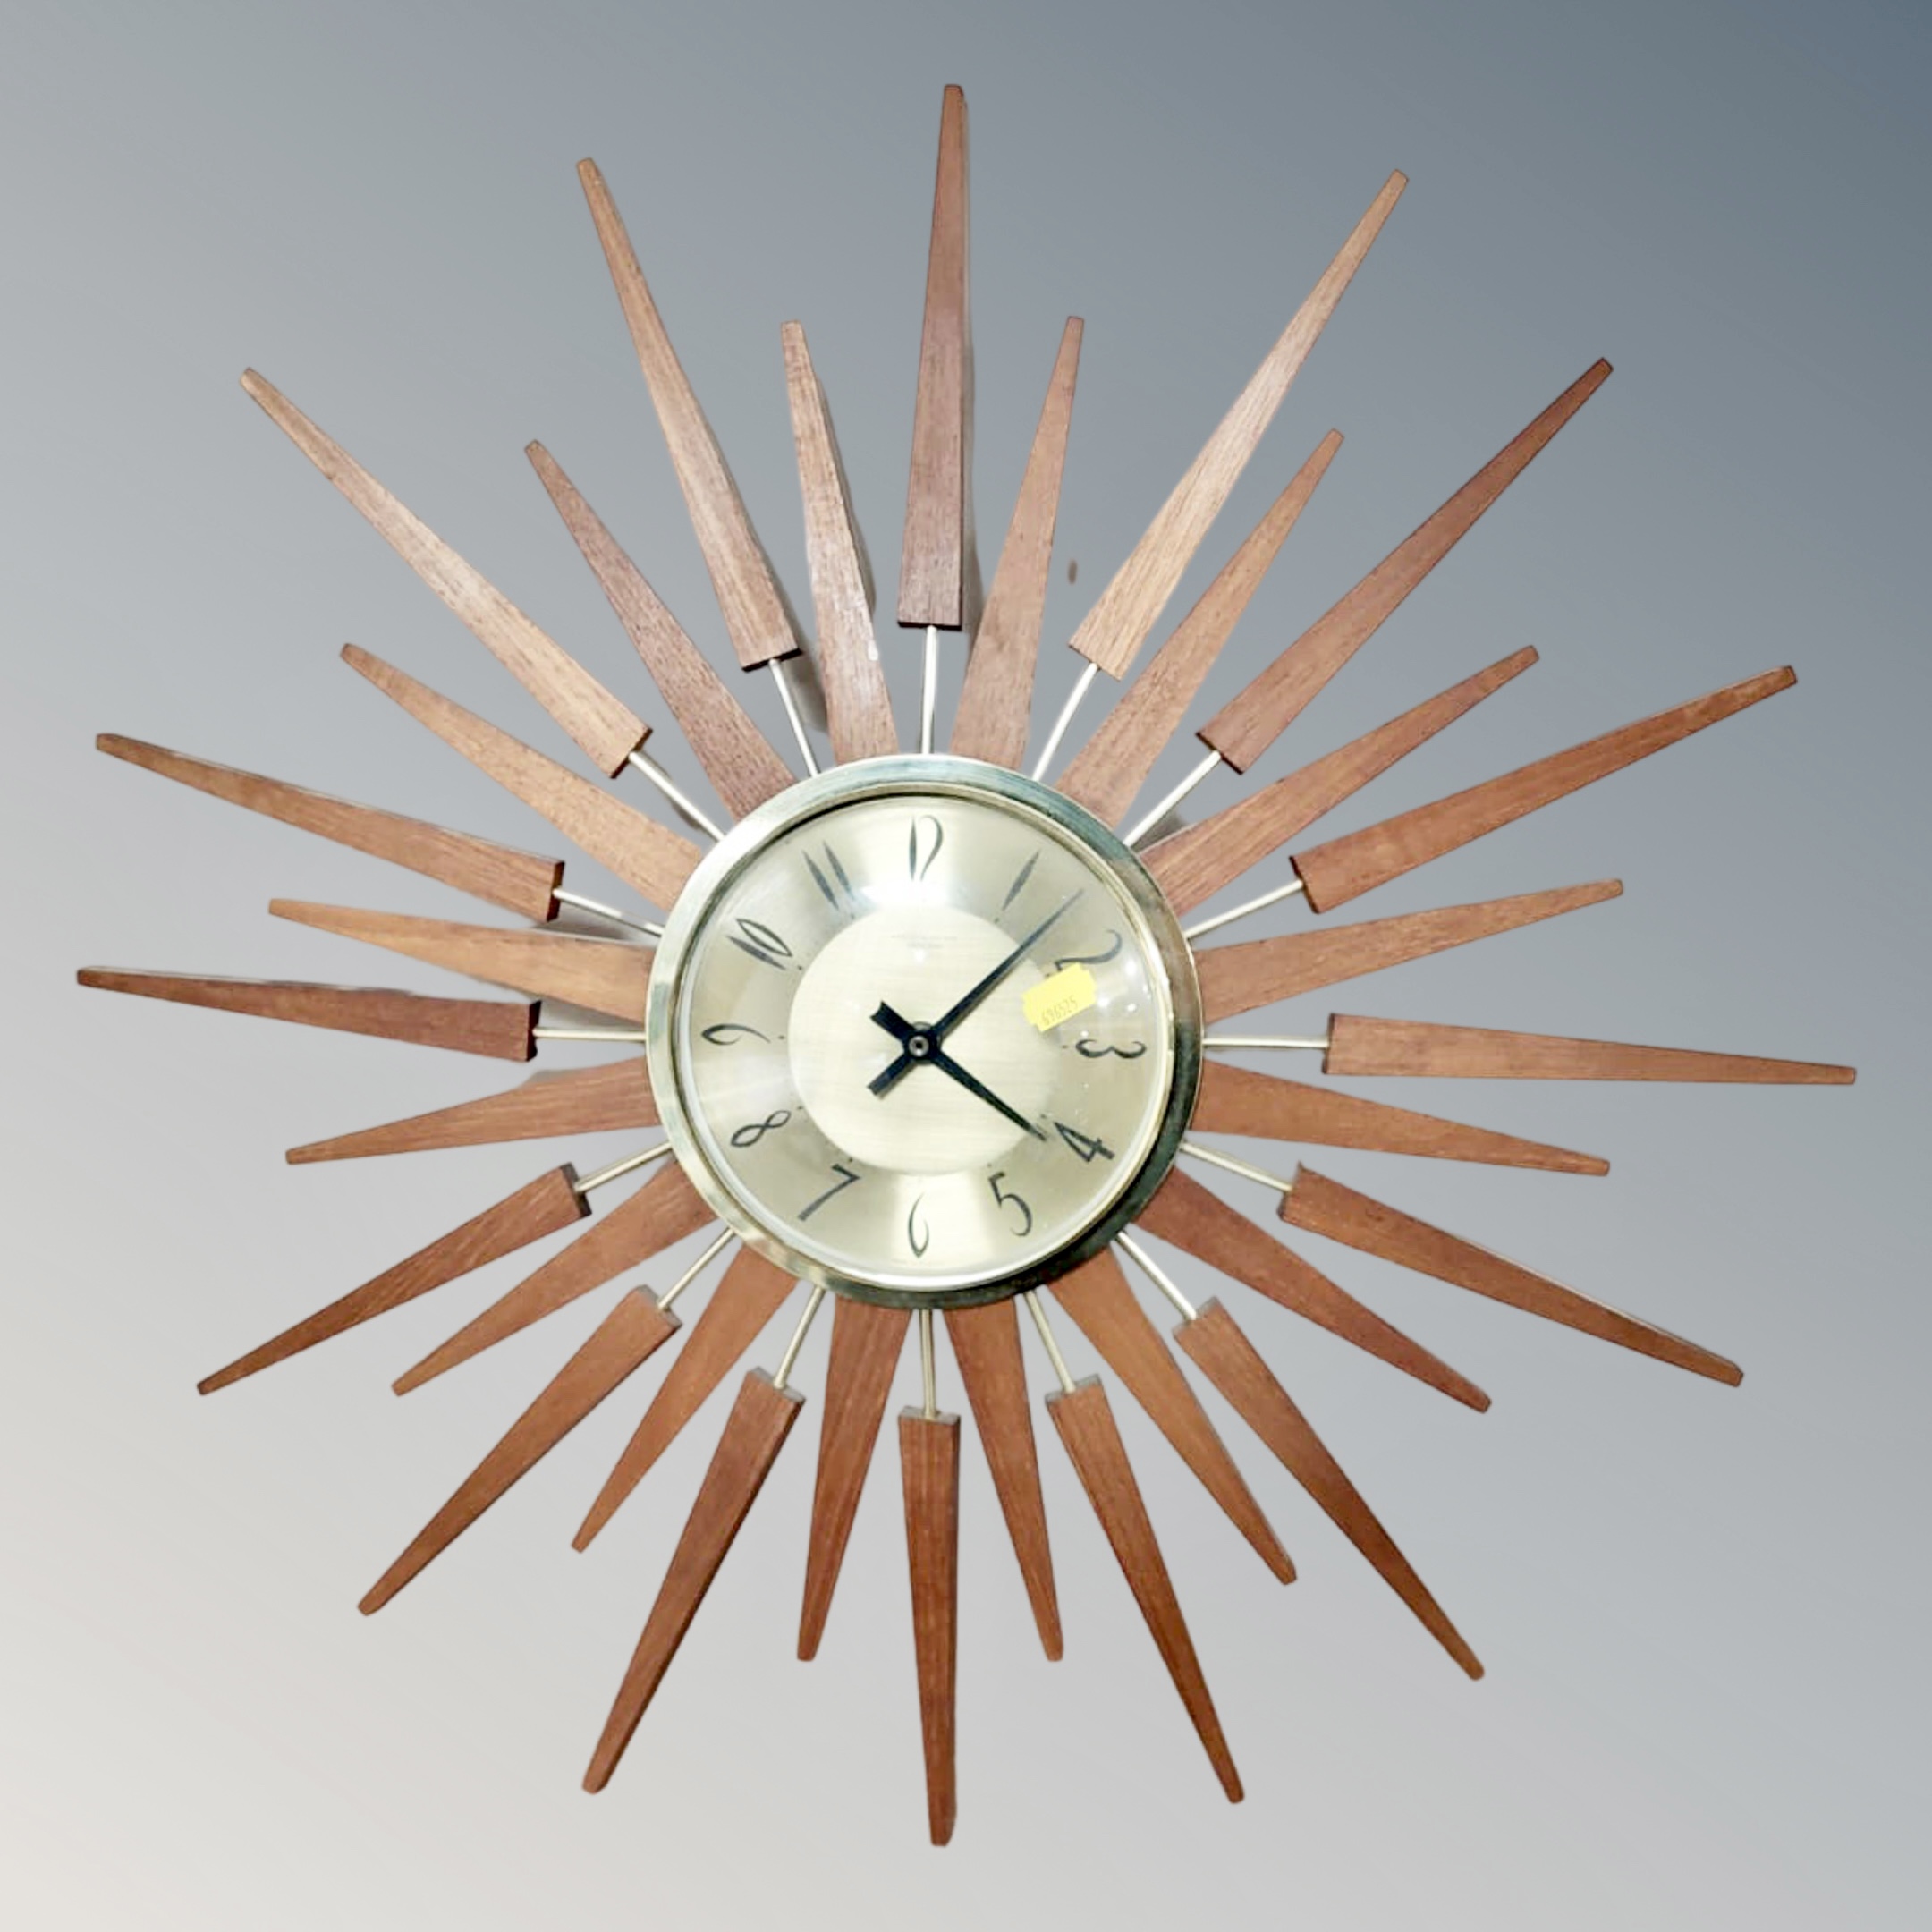 An Anstey & Wilson teak sunburst wall clock